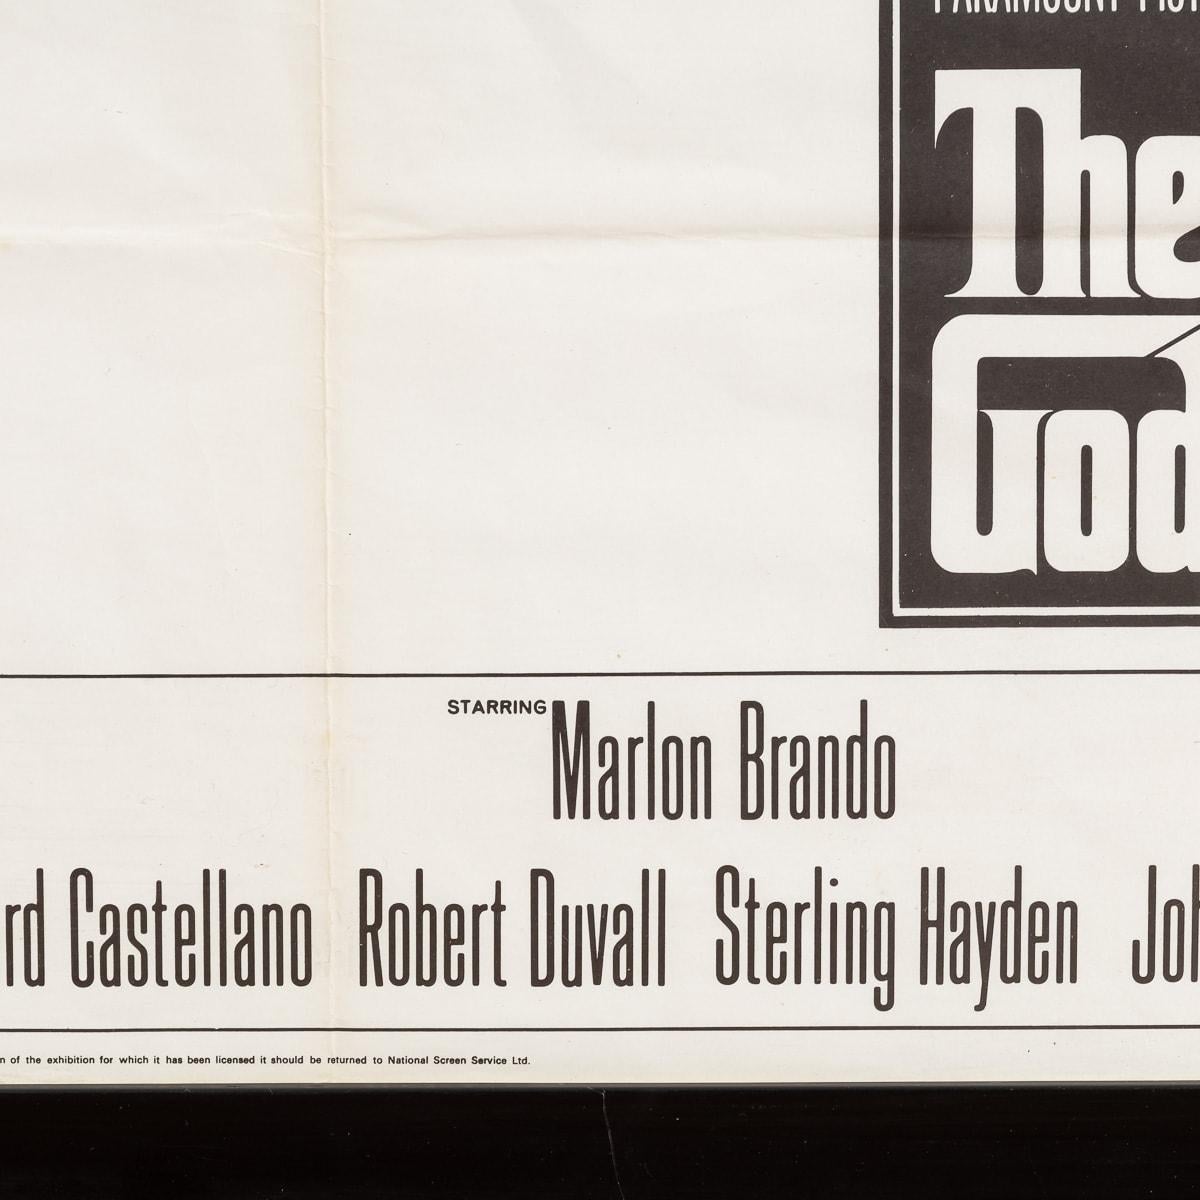 the godfather original movie poster